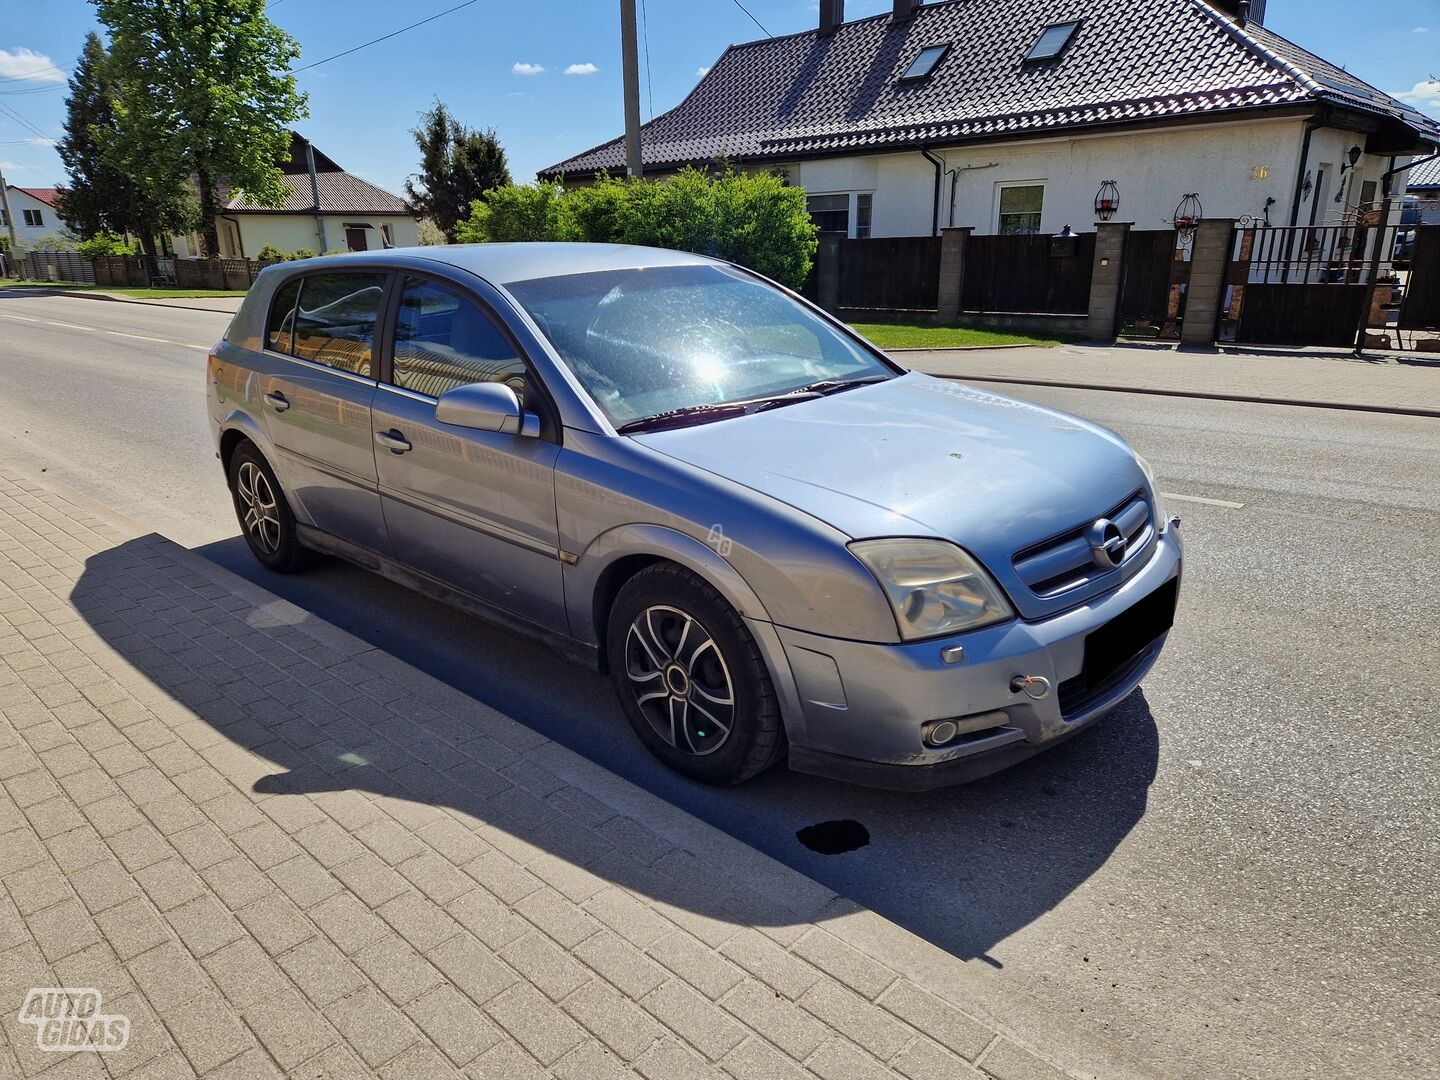 Opel Signum 2004 г запчясти